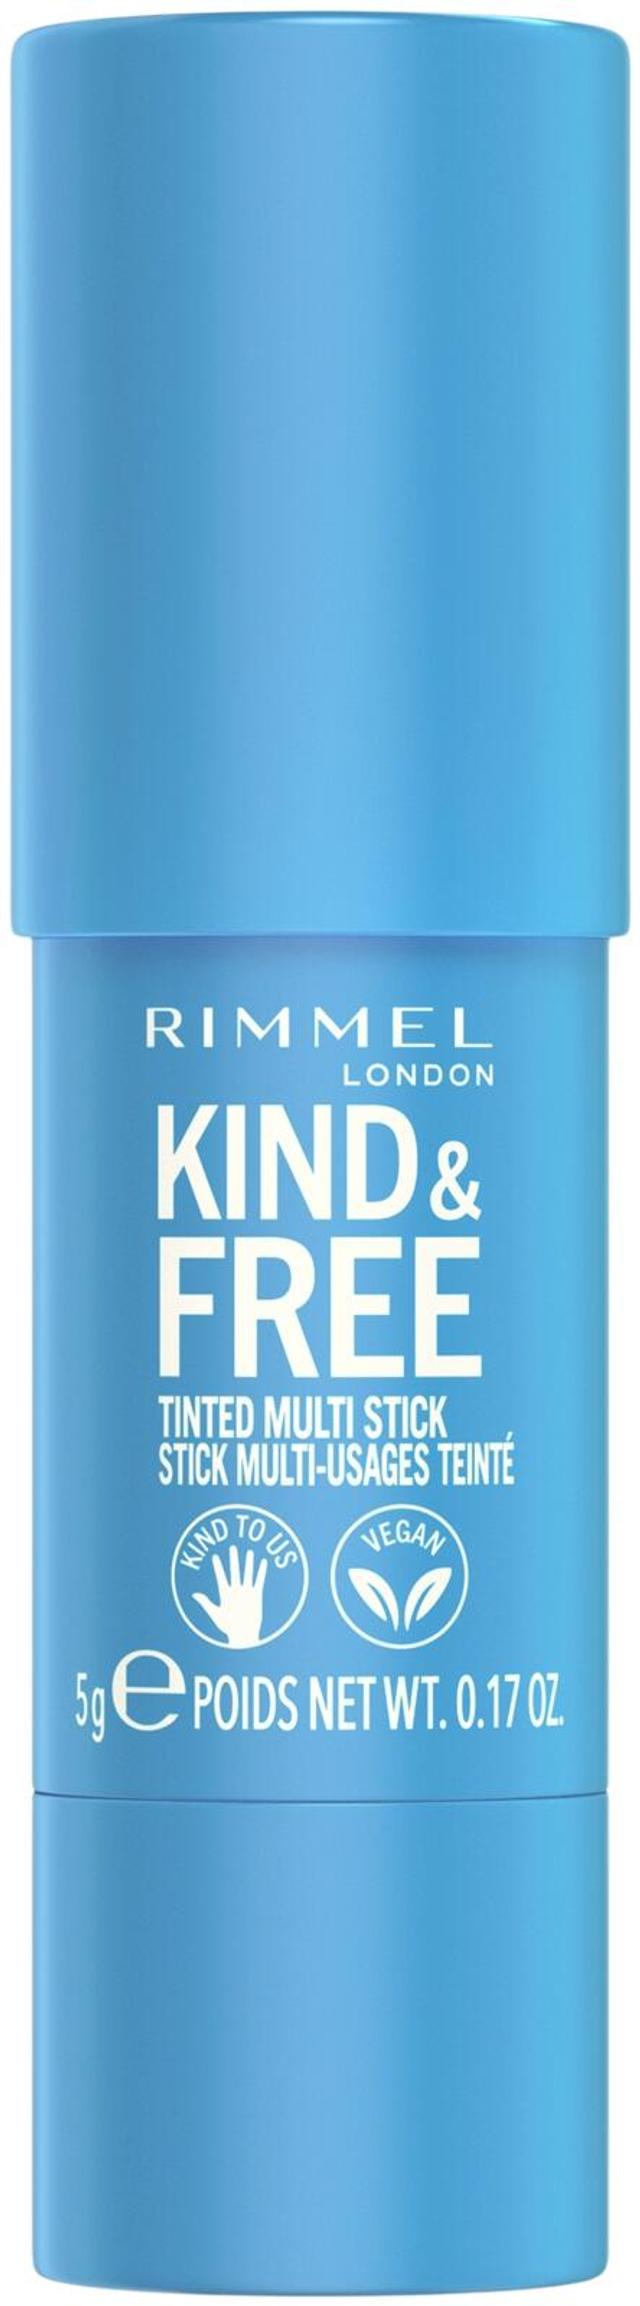 Rimmel Kind & Free Multi Stick 5 g 003 Pink Heat poskipuna